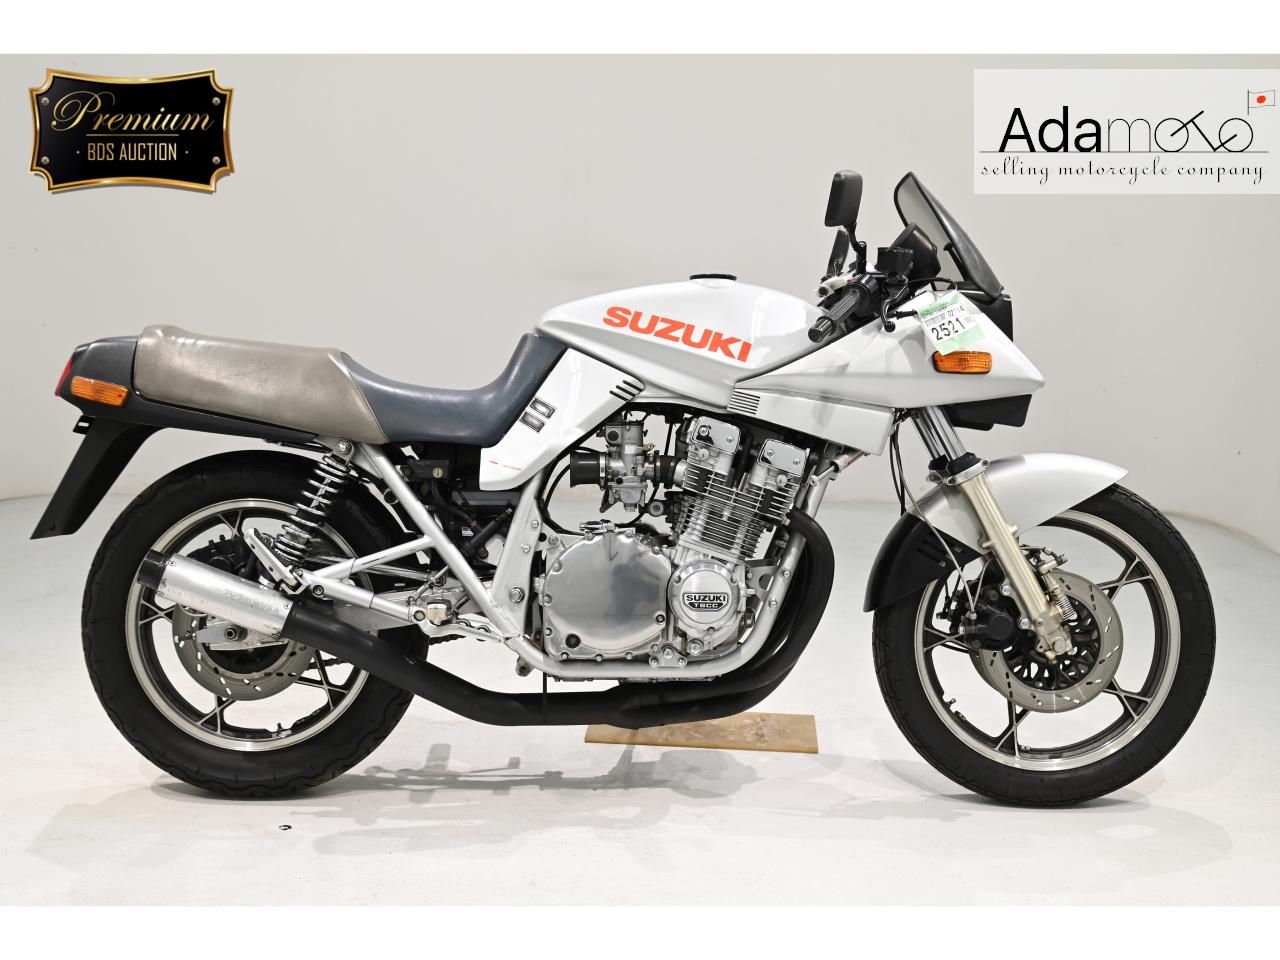 Suzuki GSX750S KATANA - Adamoto - Motorcycles from Japan